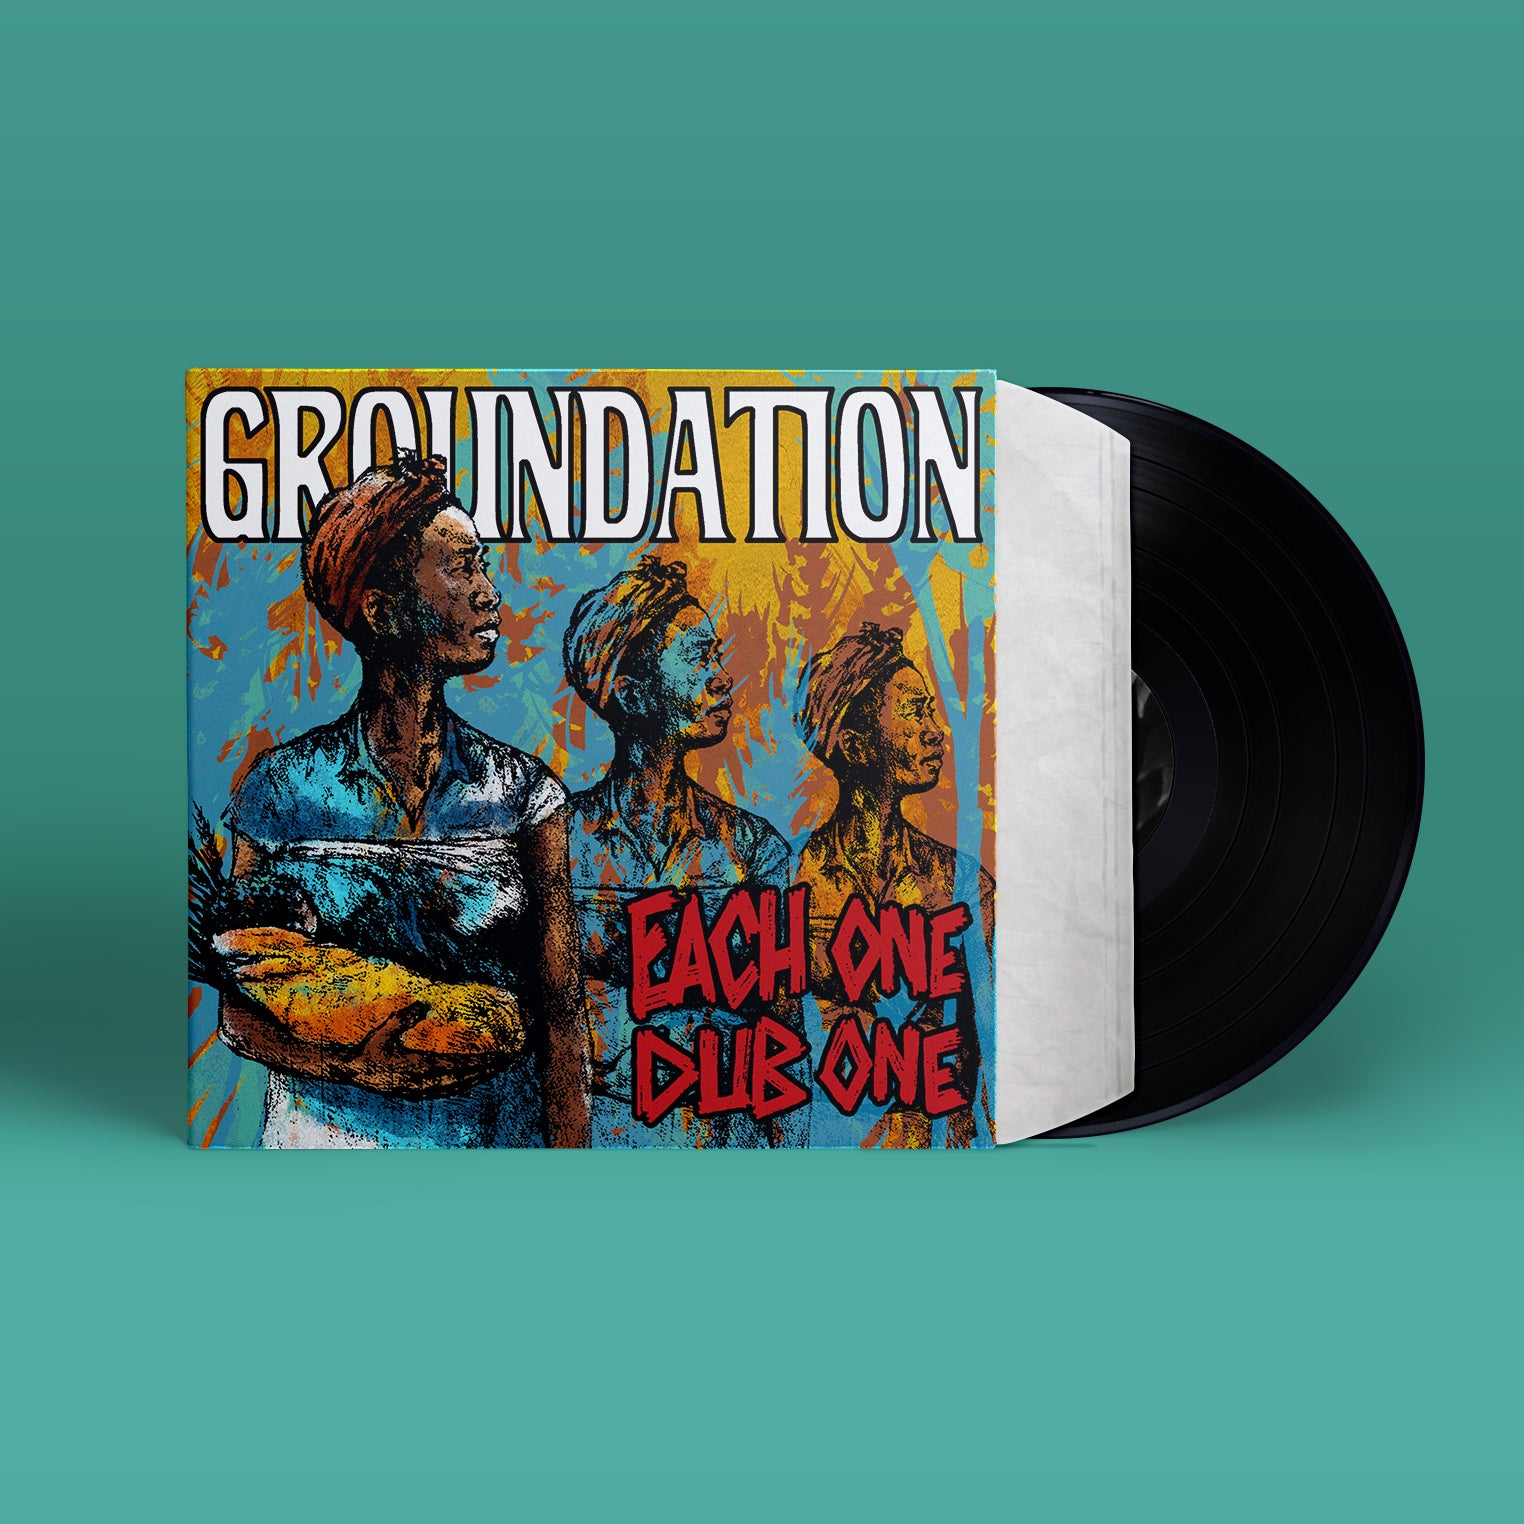 Groundation - Each one dub one